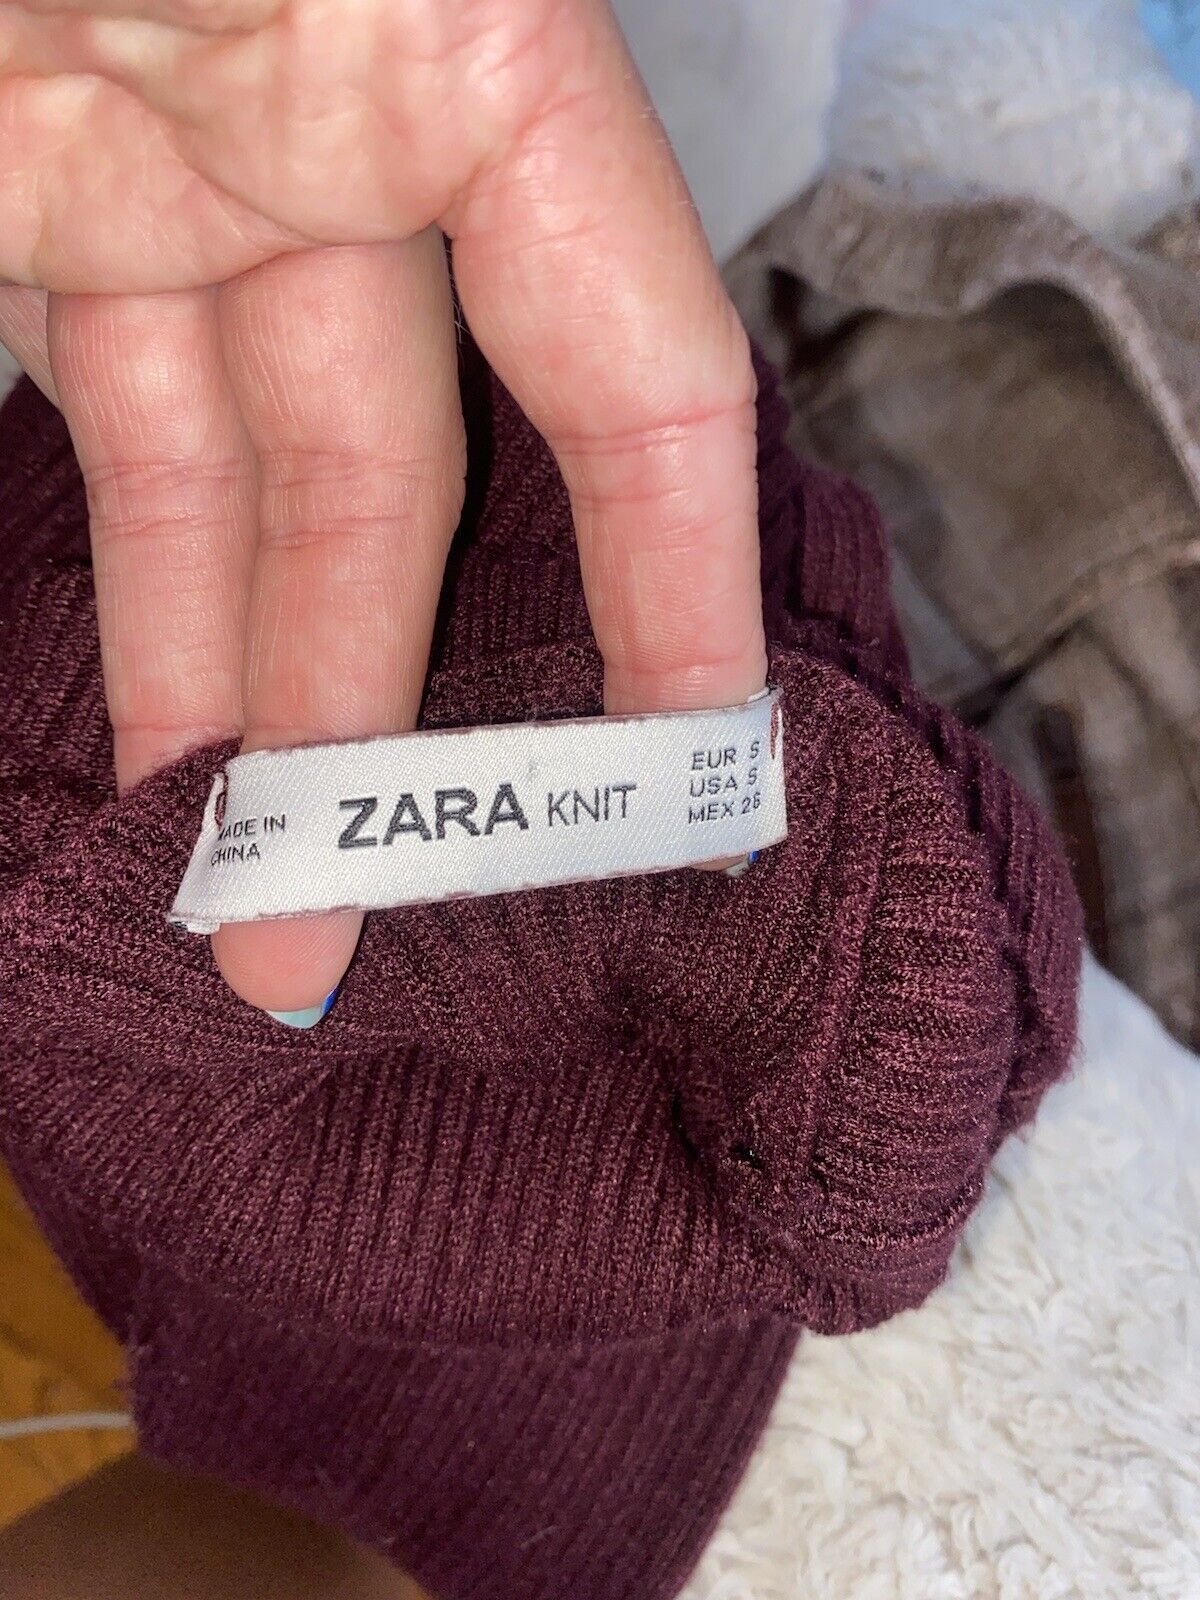 Maroon Turtleneck Sweater - Zara - Size Small